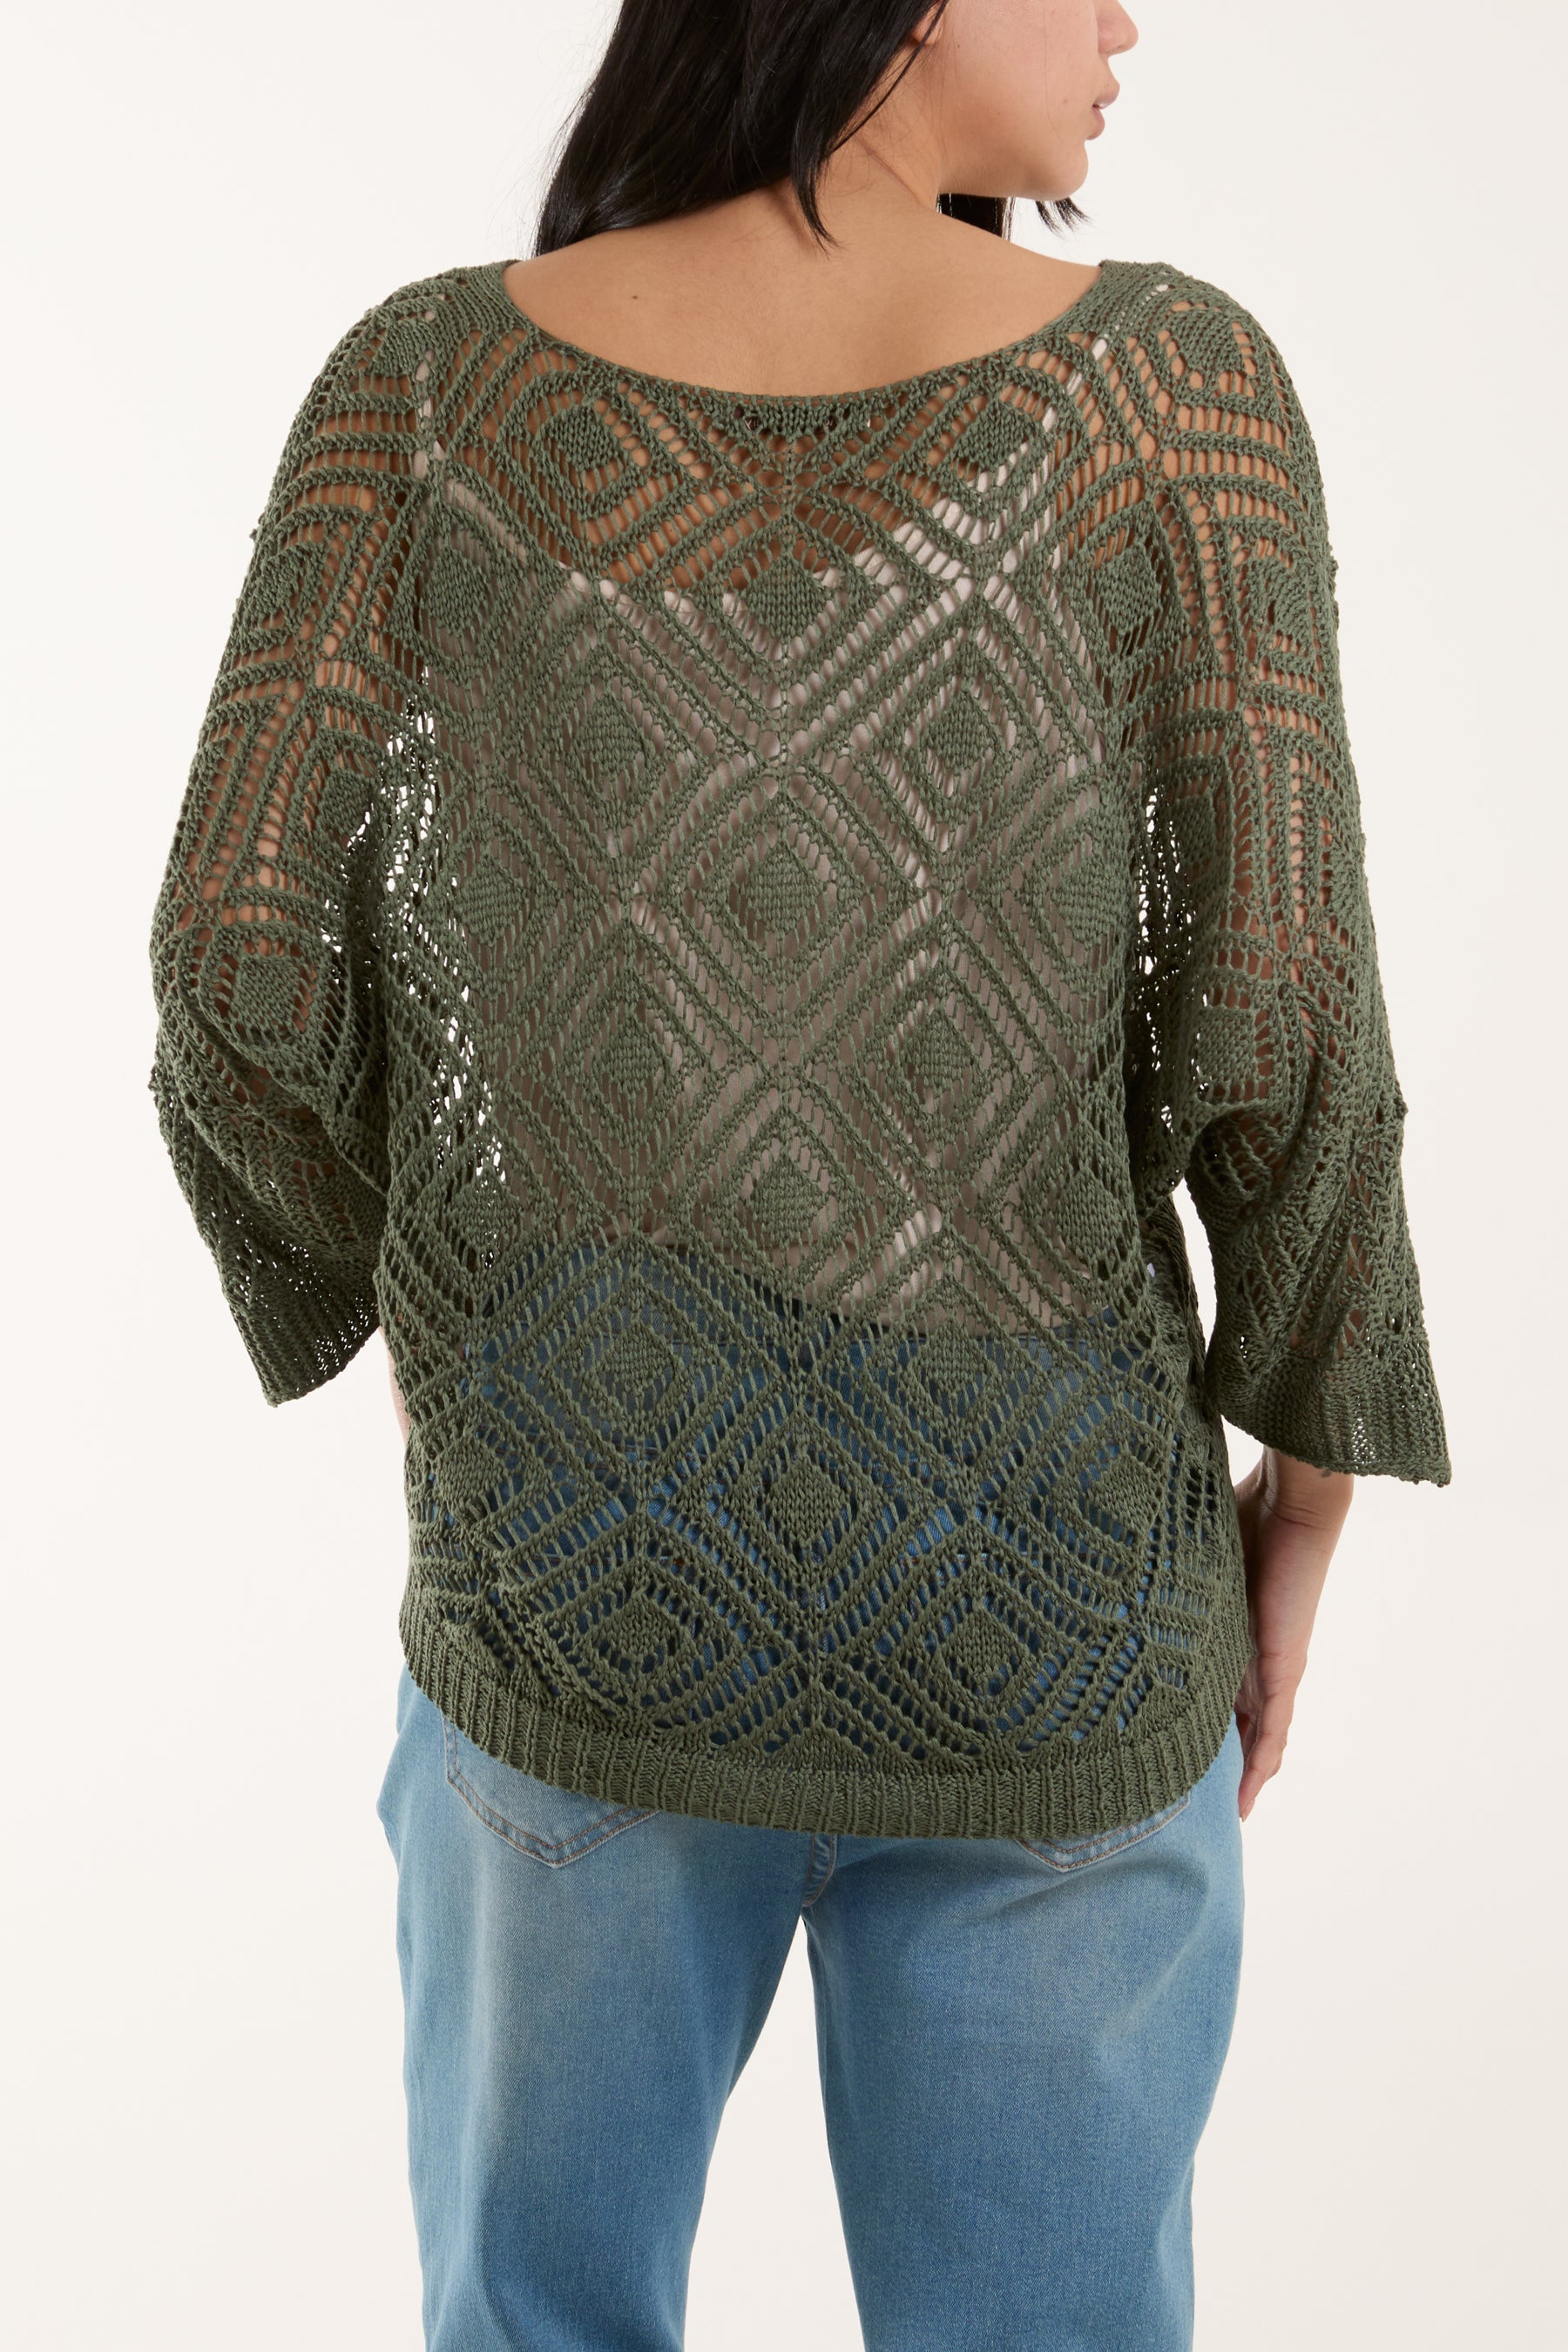 Diamond Crochet Cover Up Top